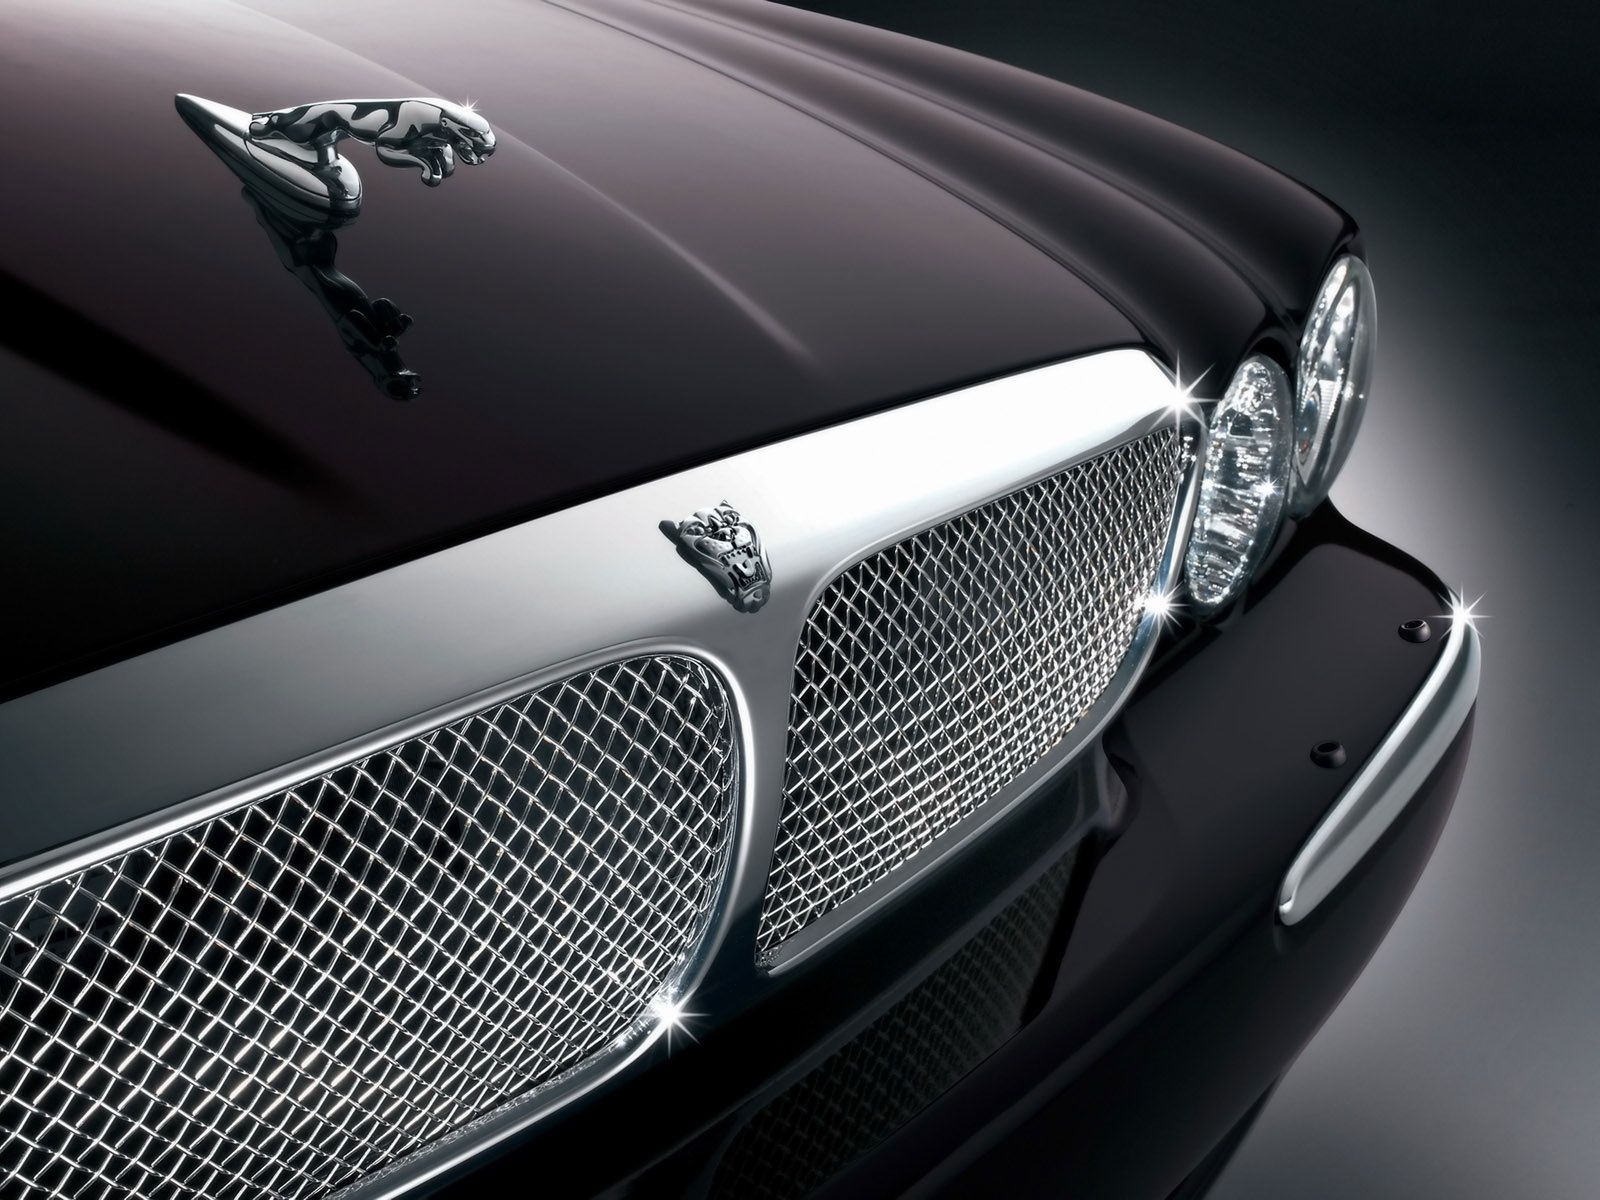 Amazing Jaguar Logo Cars Wallpaper Picture Image Free Download. Jaguar car, Jaguar car logo, Jaguar xj